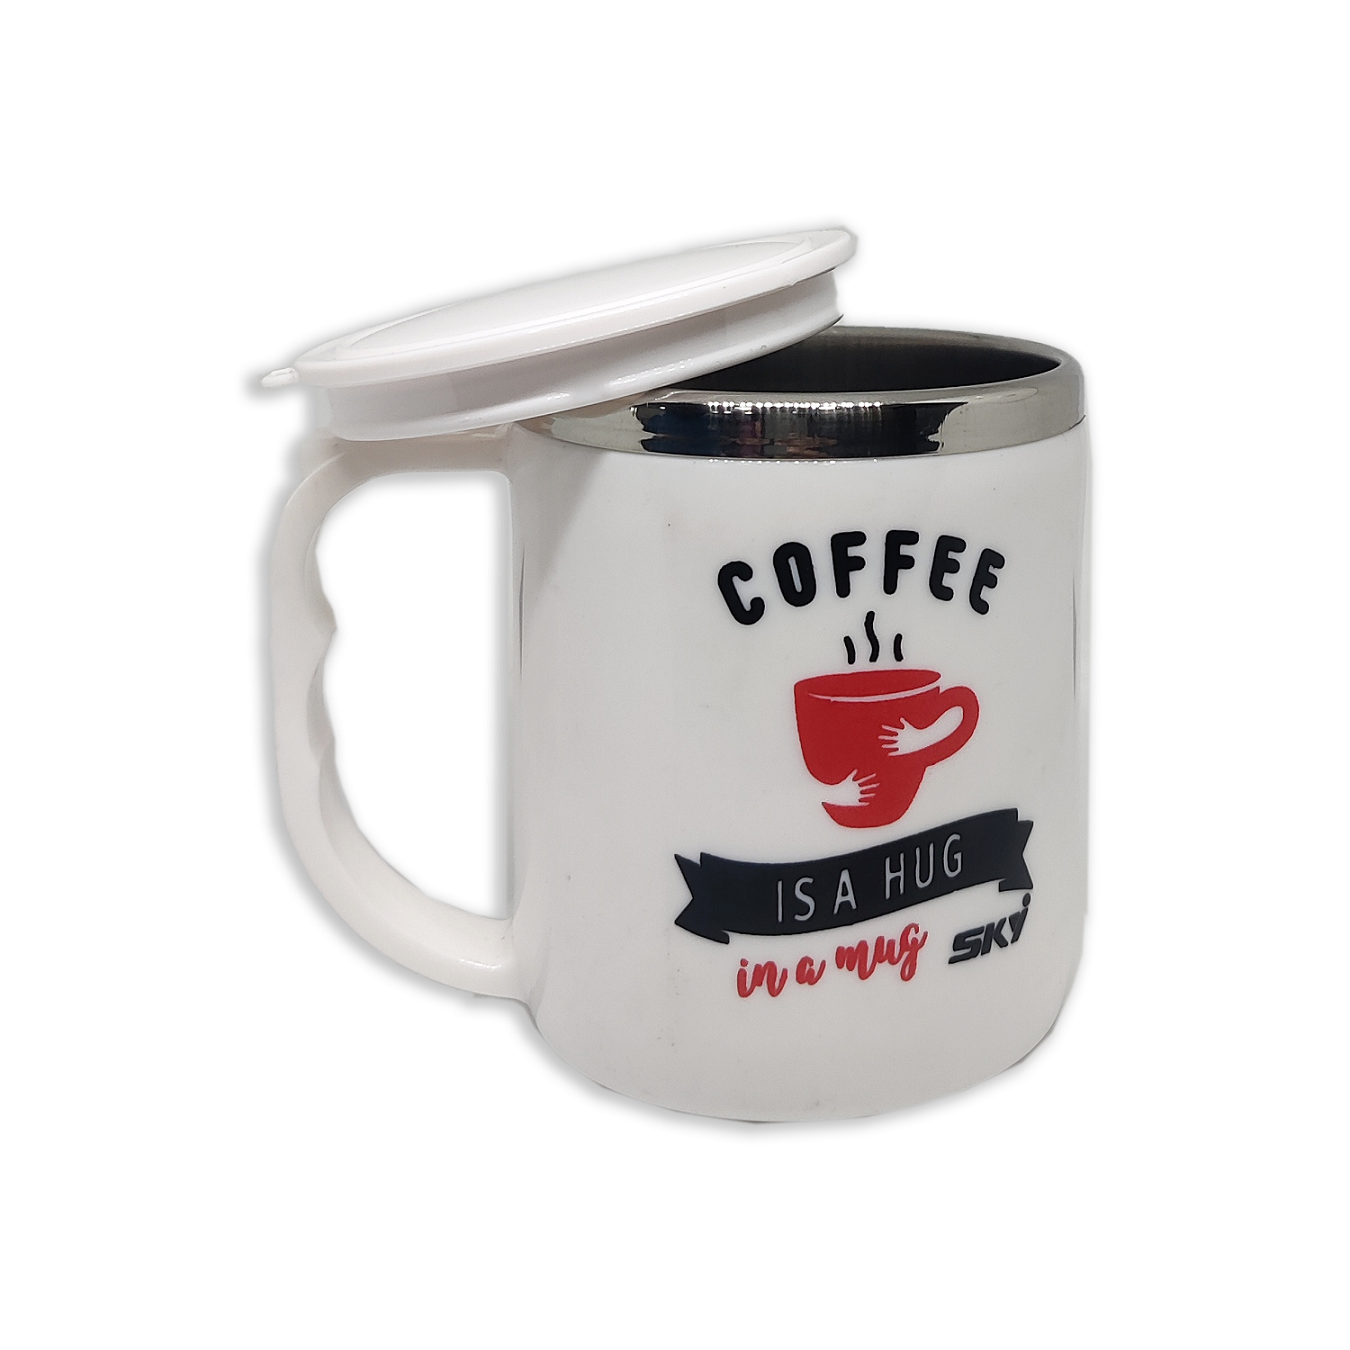 Jolly Steel Small White Coffee Mug